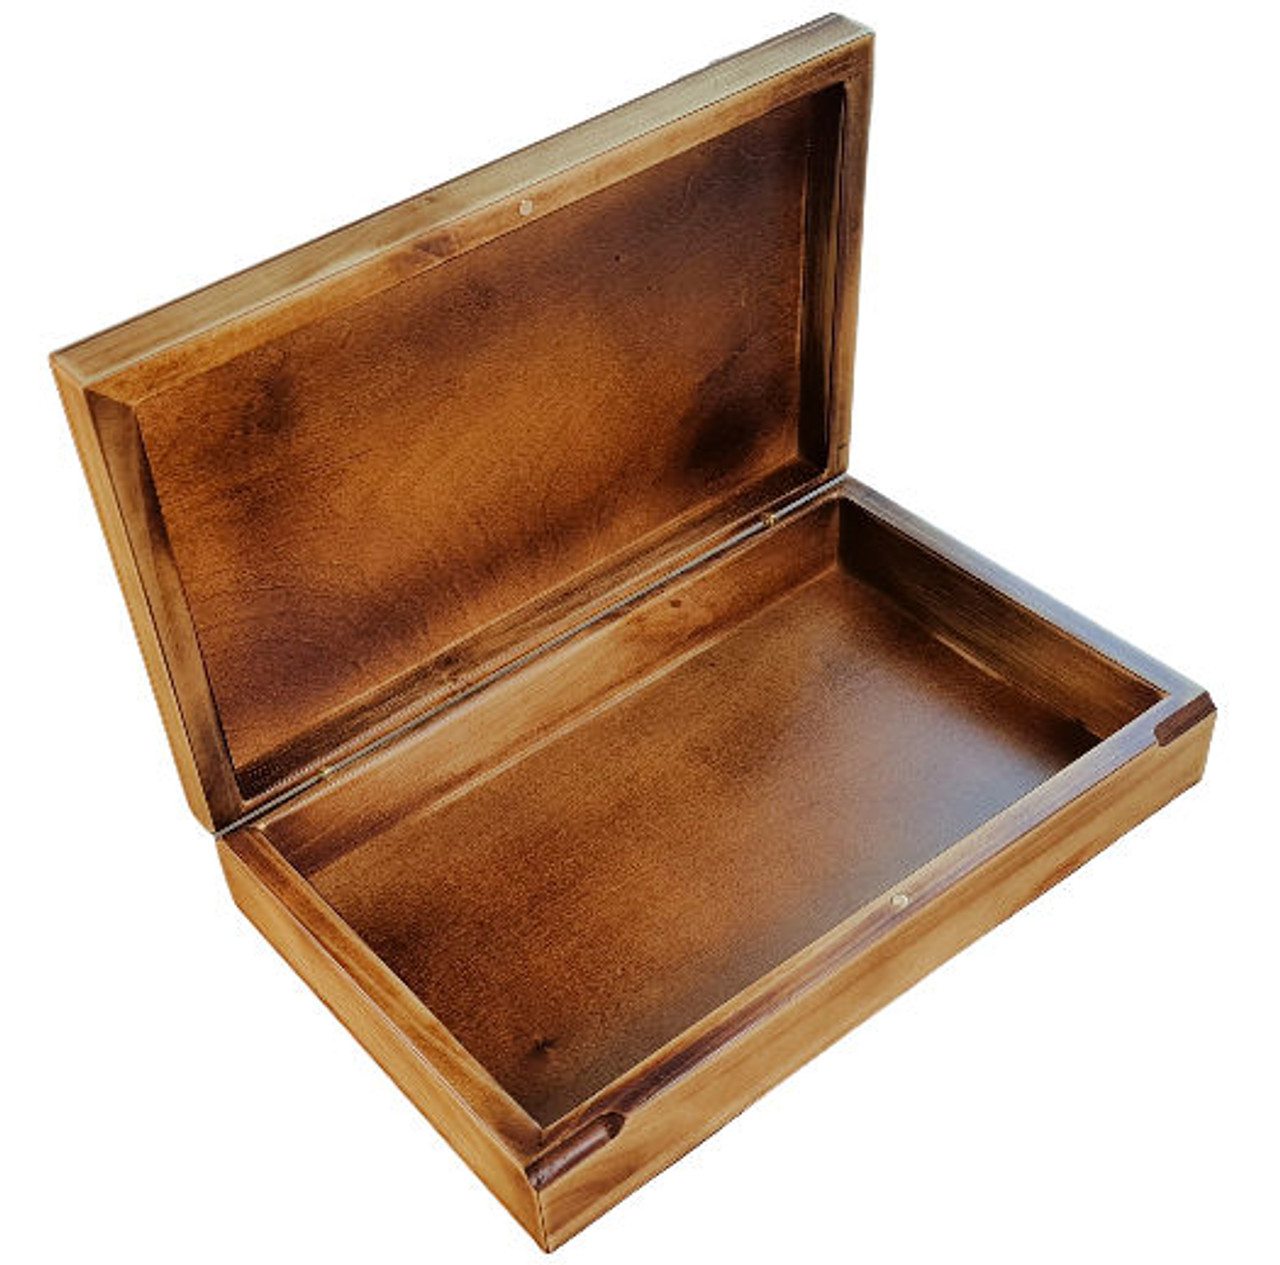 Cuban Cigar box, Smokers decorative wooden stash box